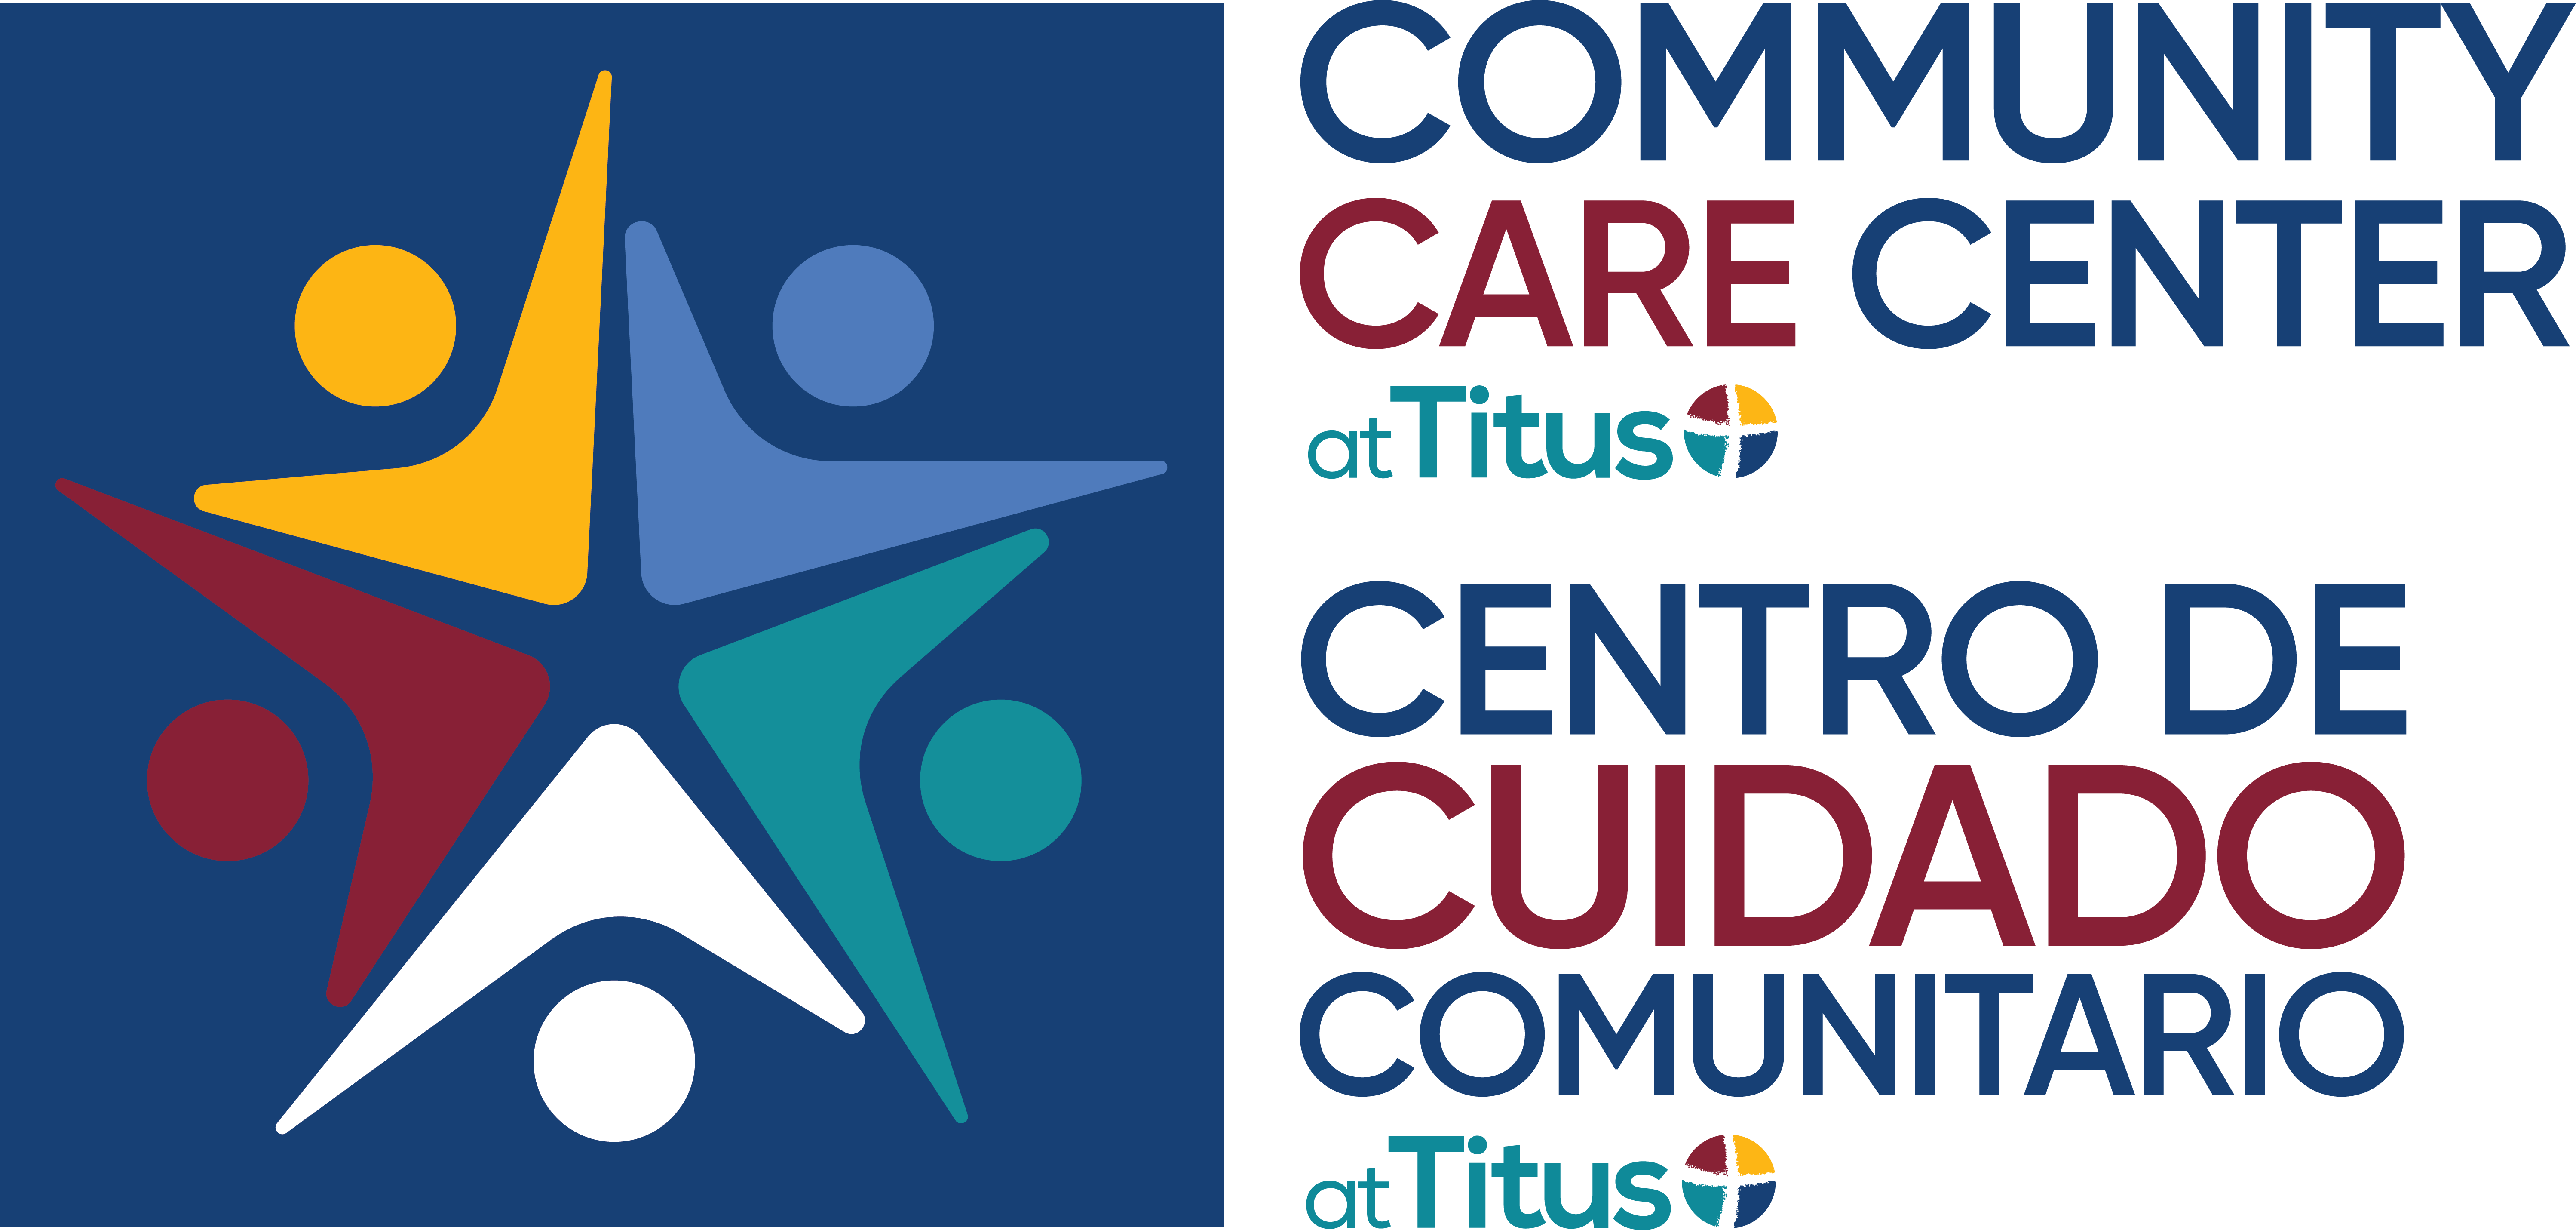 Community Care Center